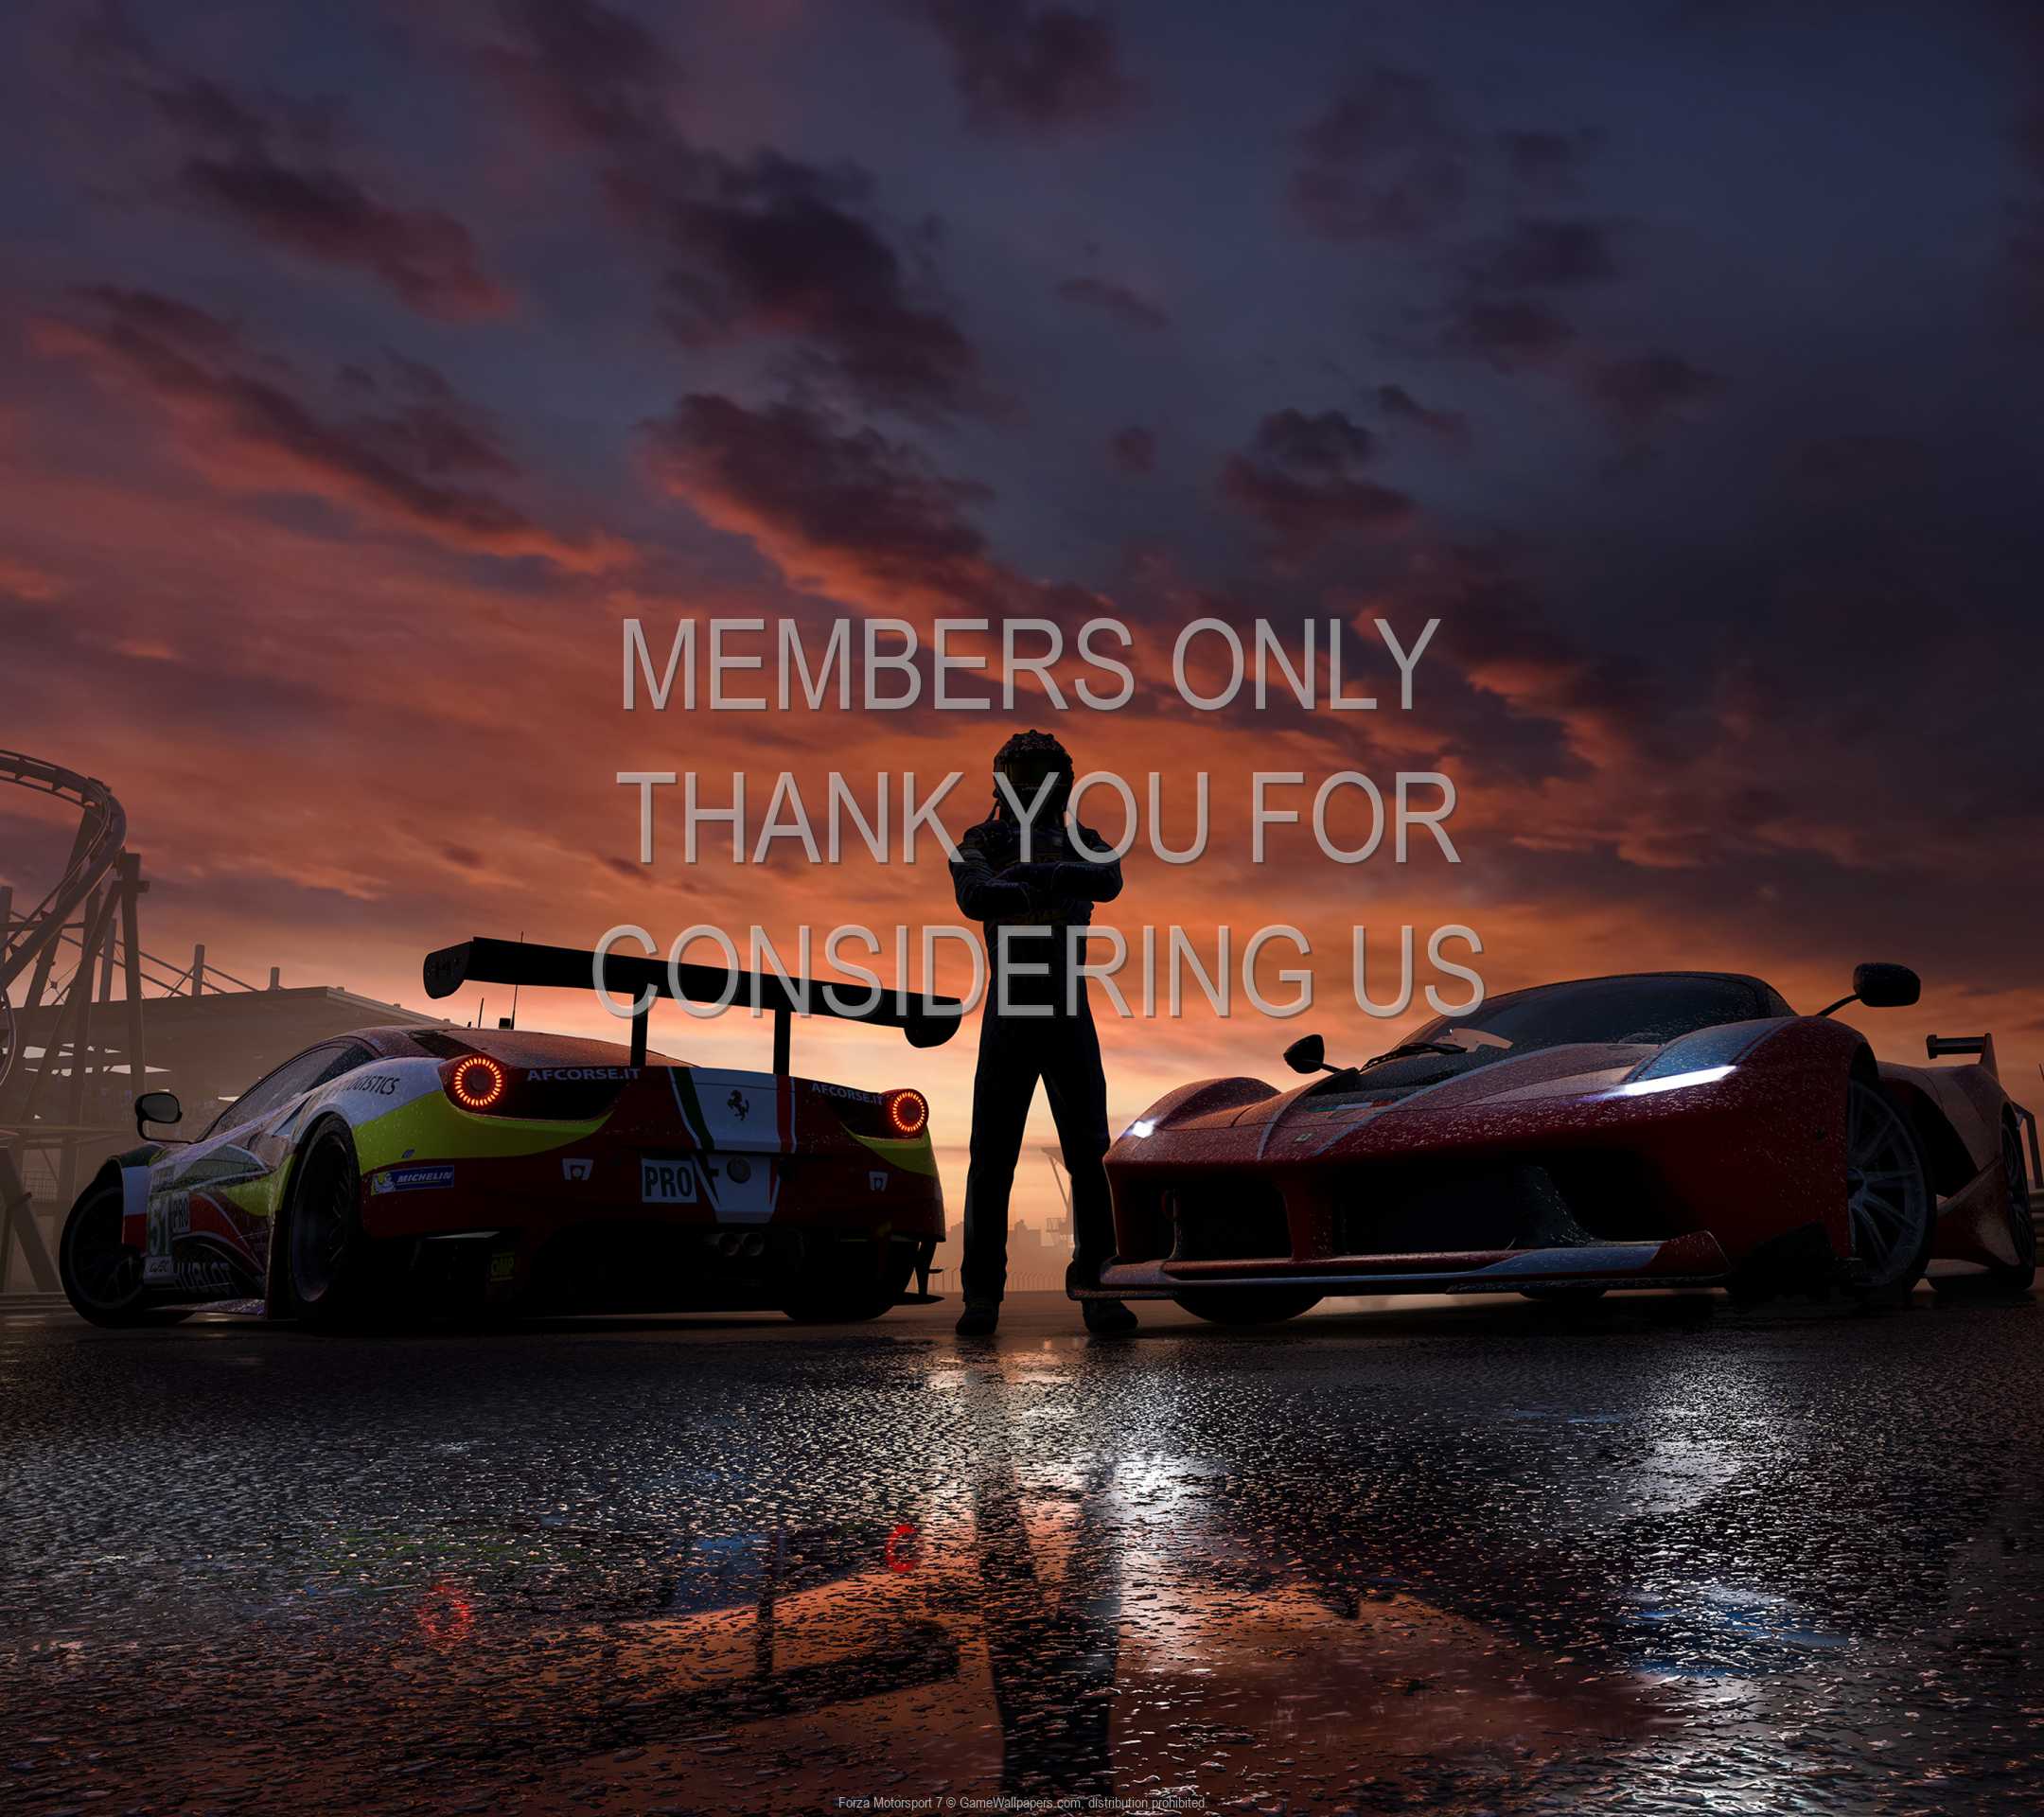 Forza Motorsport 7 1080p%20Horizontal Mobile wallpaper or background 02